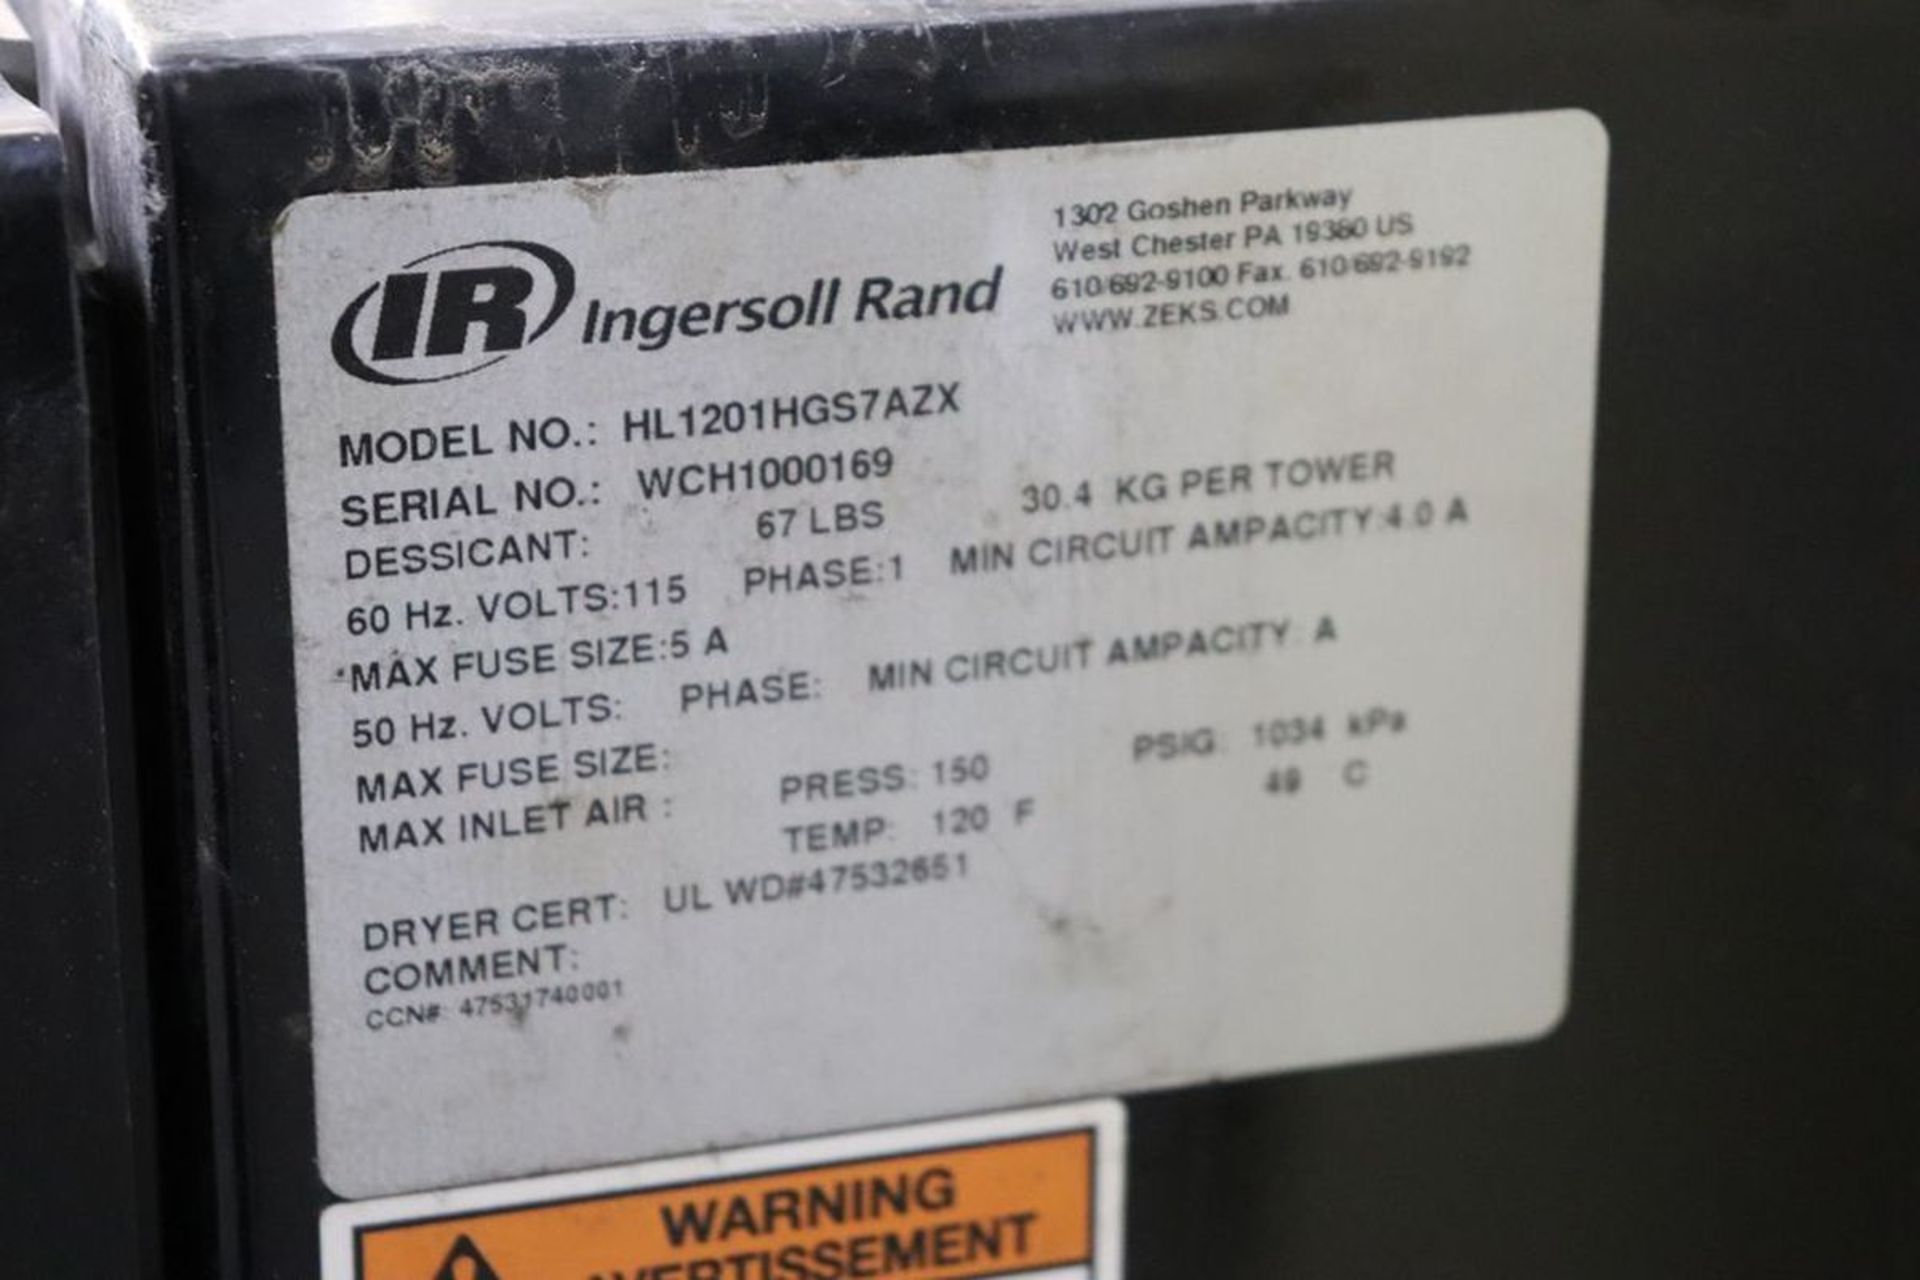 Ingersoll Rand HL1201HGS7AZX 120 CFM Desiccant Compressed Air Dryer - Image 9 of 9